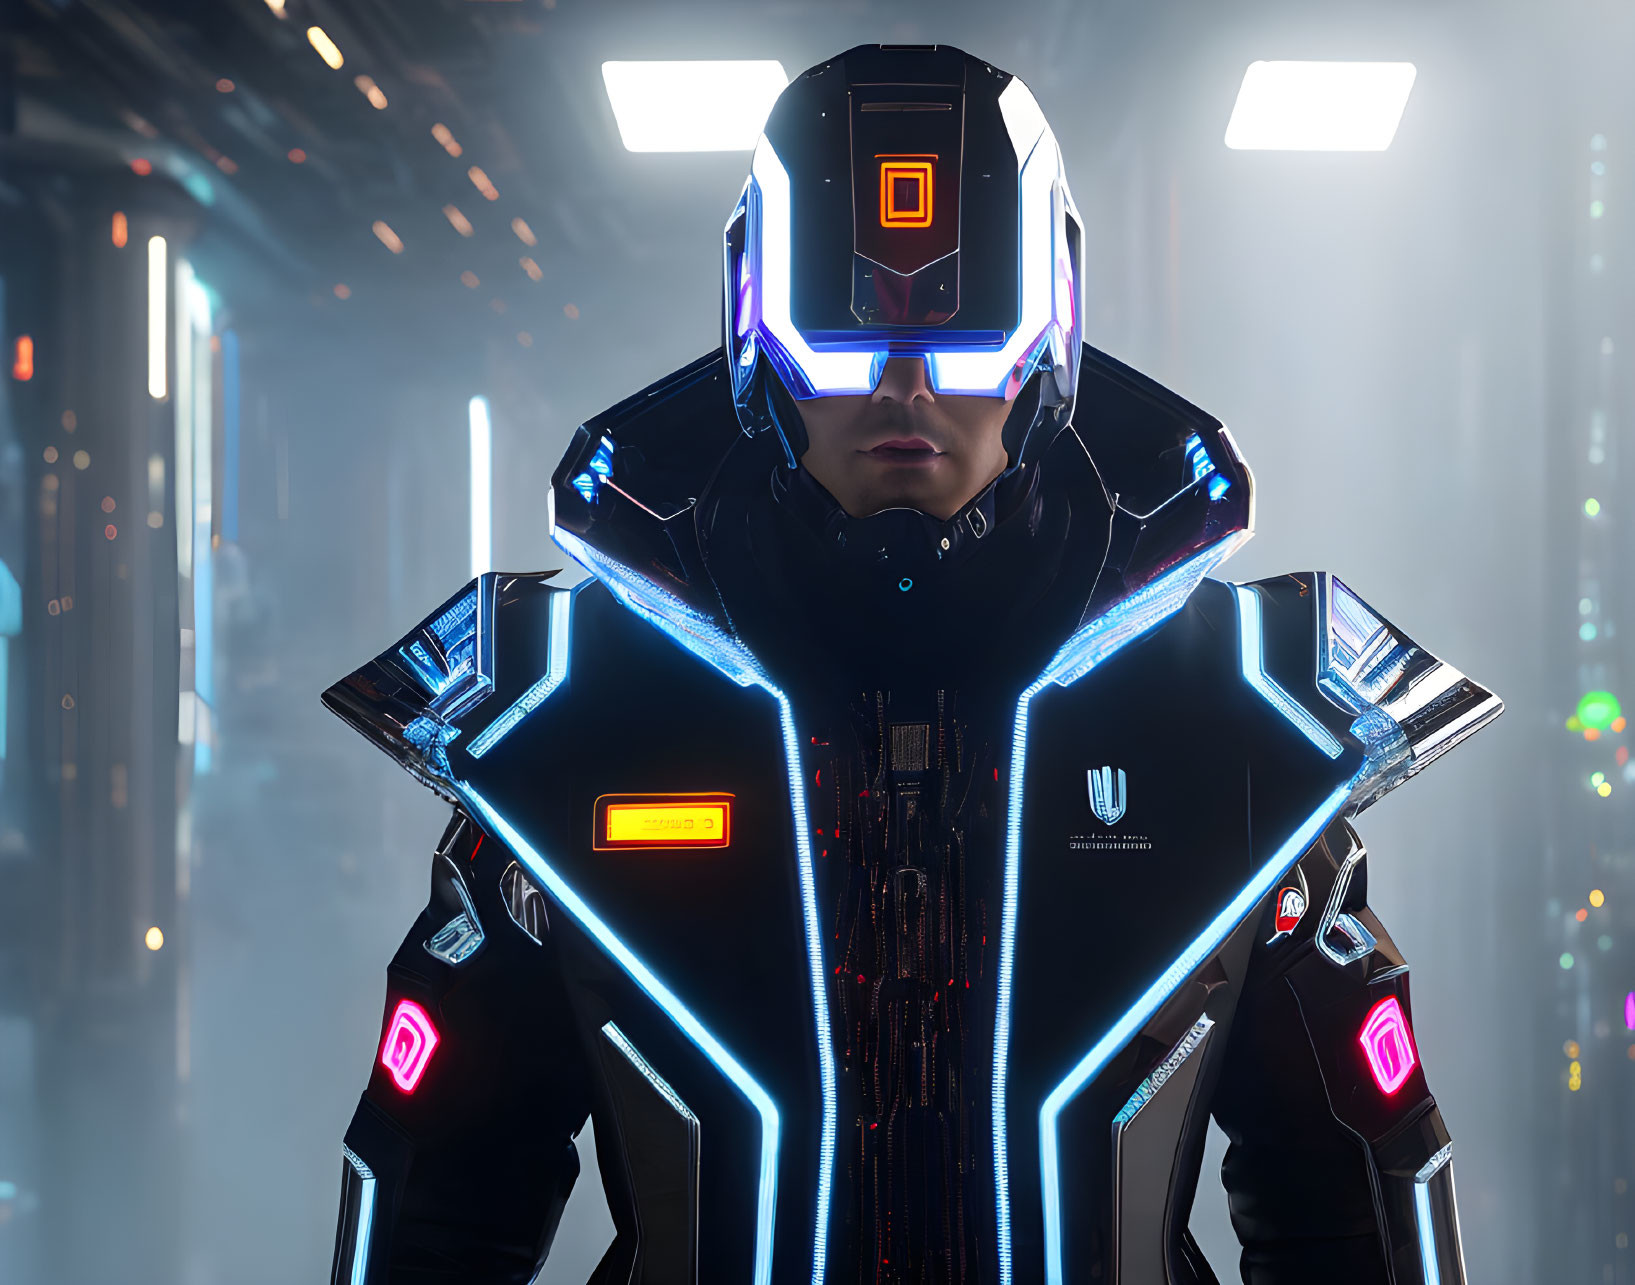 Futuristic armored person with glowing blue accents in sci-fi corridor